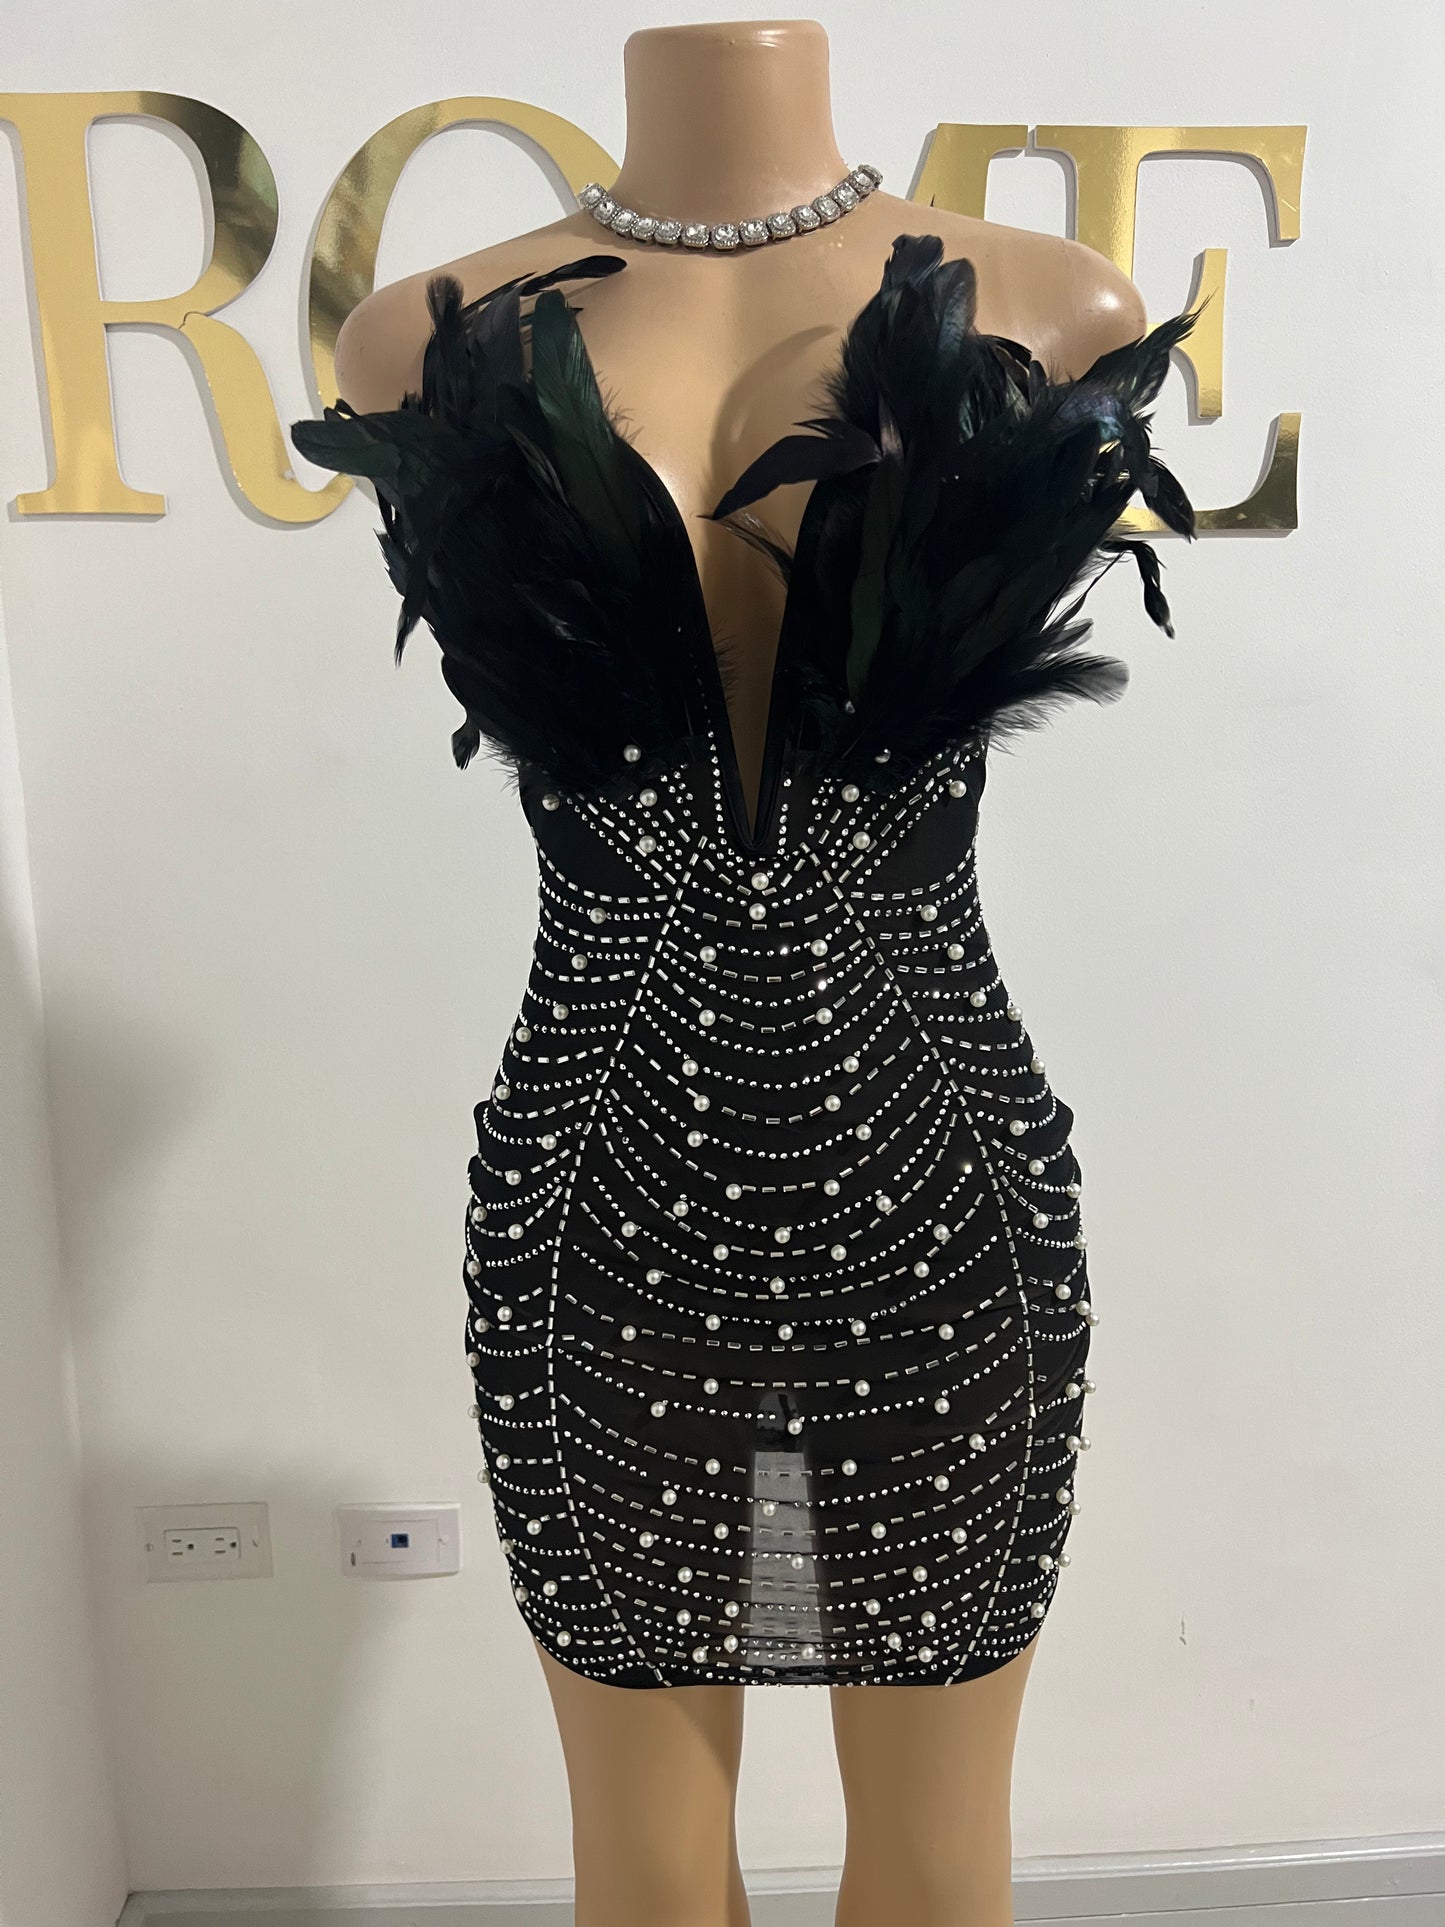 Elle Feather Crystal Dress (Black)